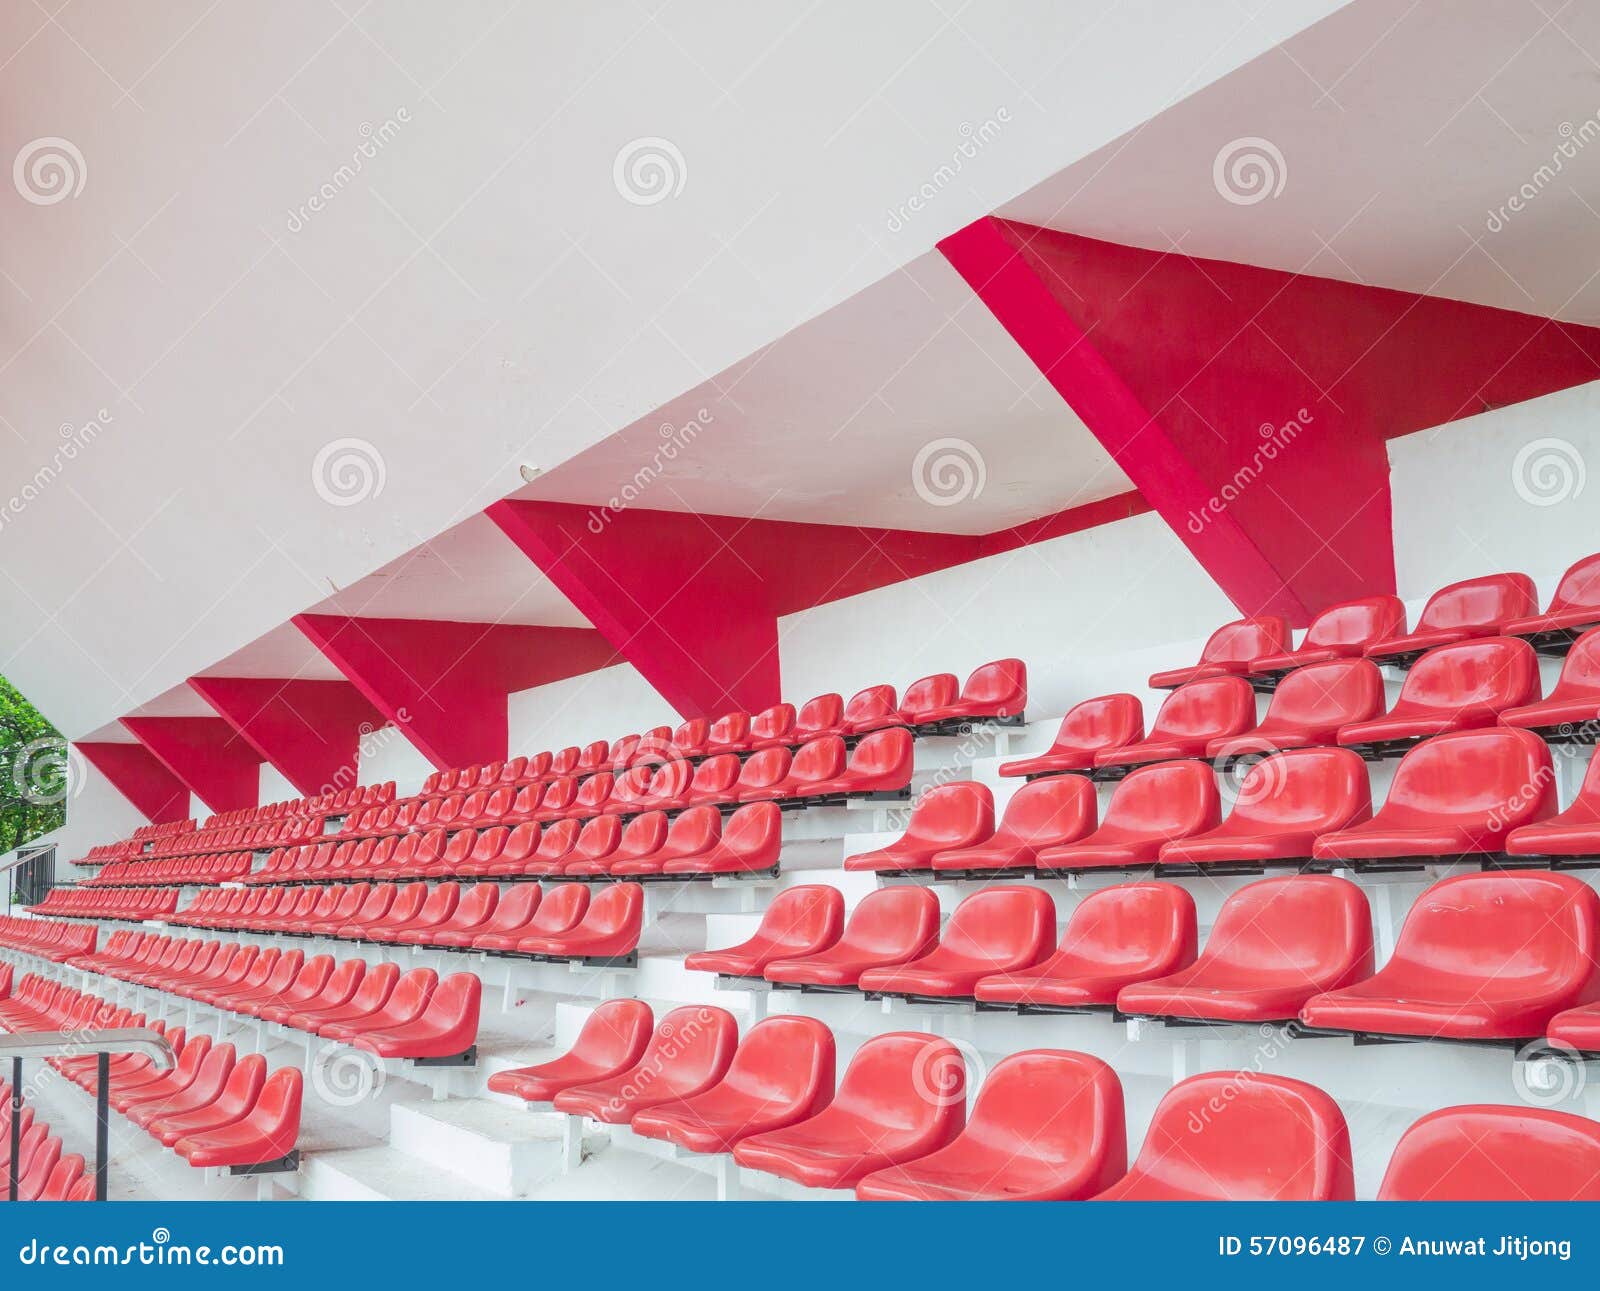 Stadium stand stock image. Image of seat, group, empty - 57096487